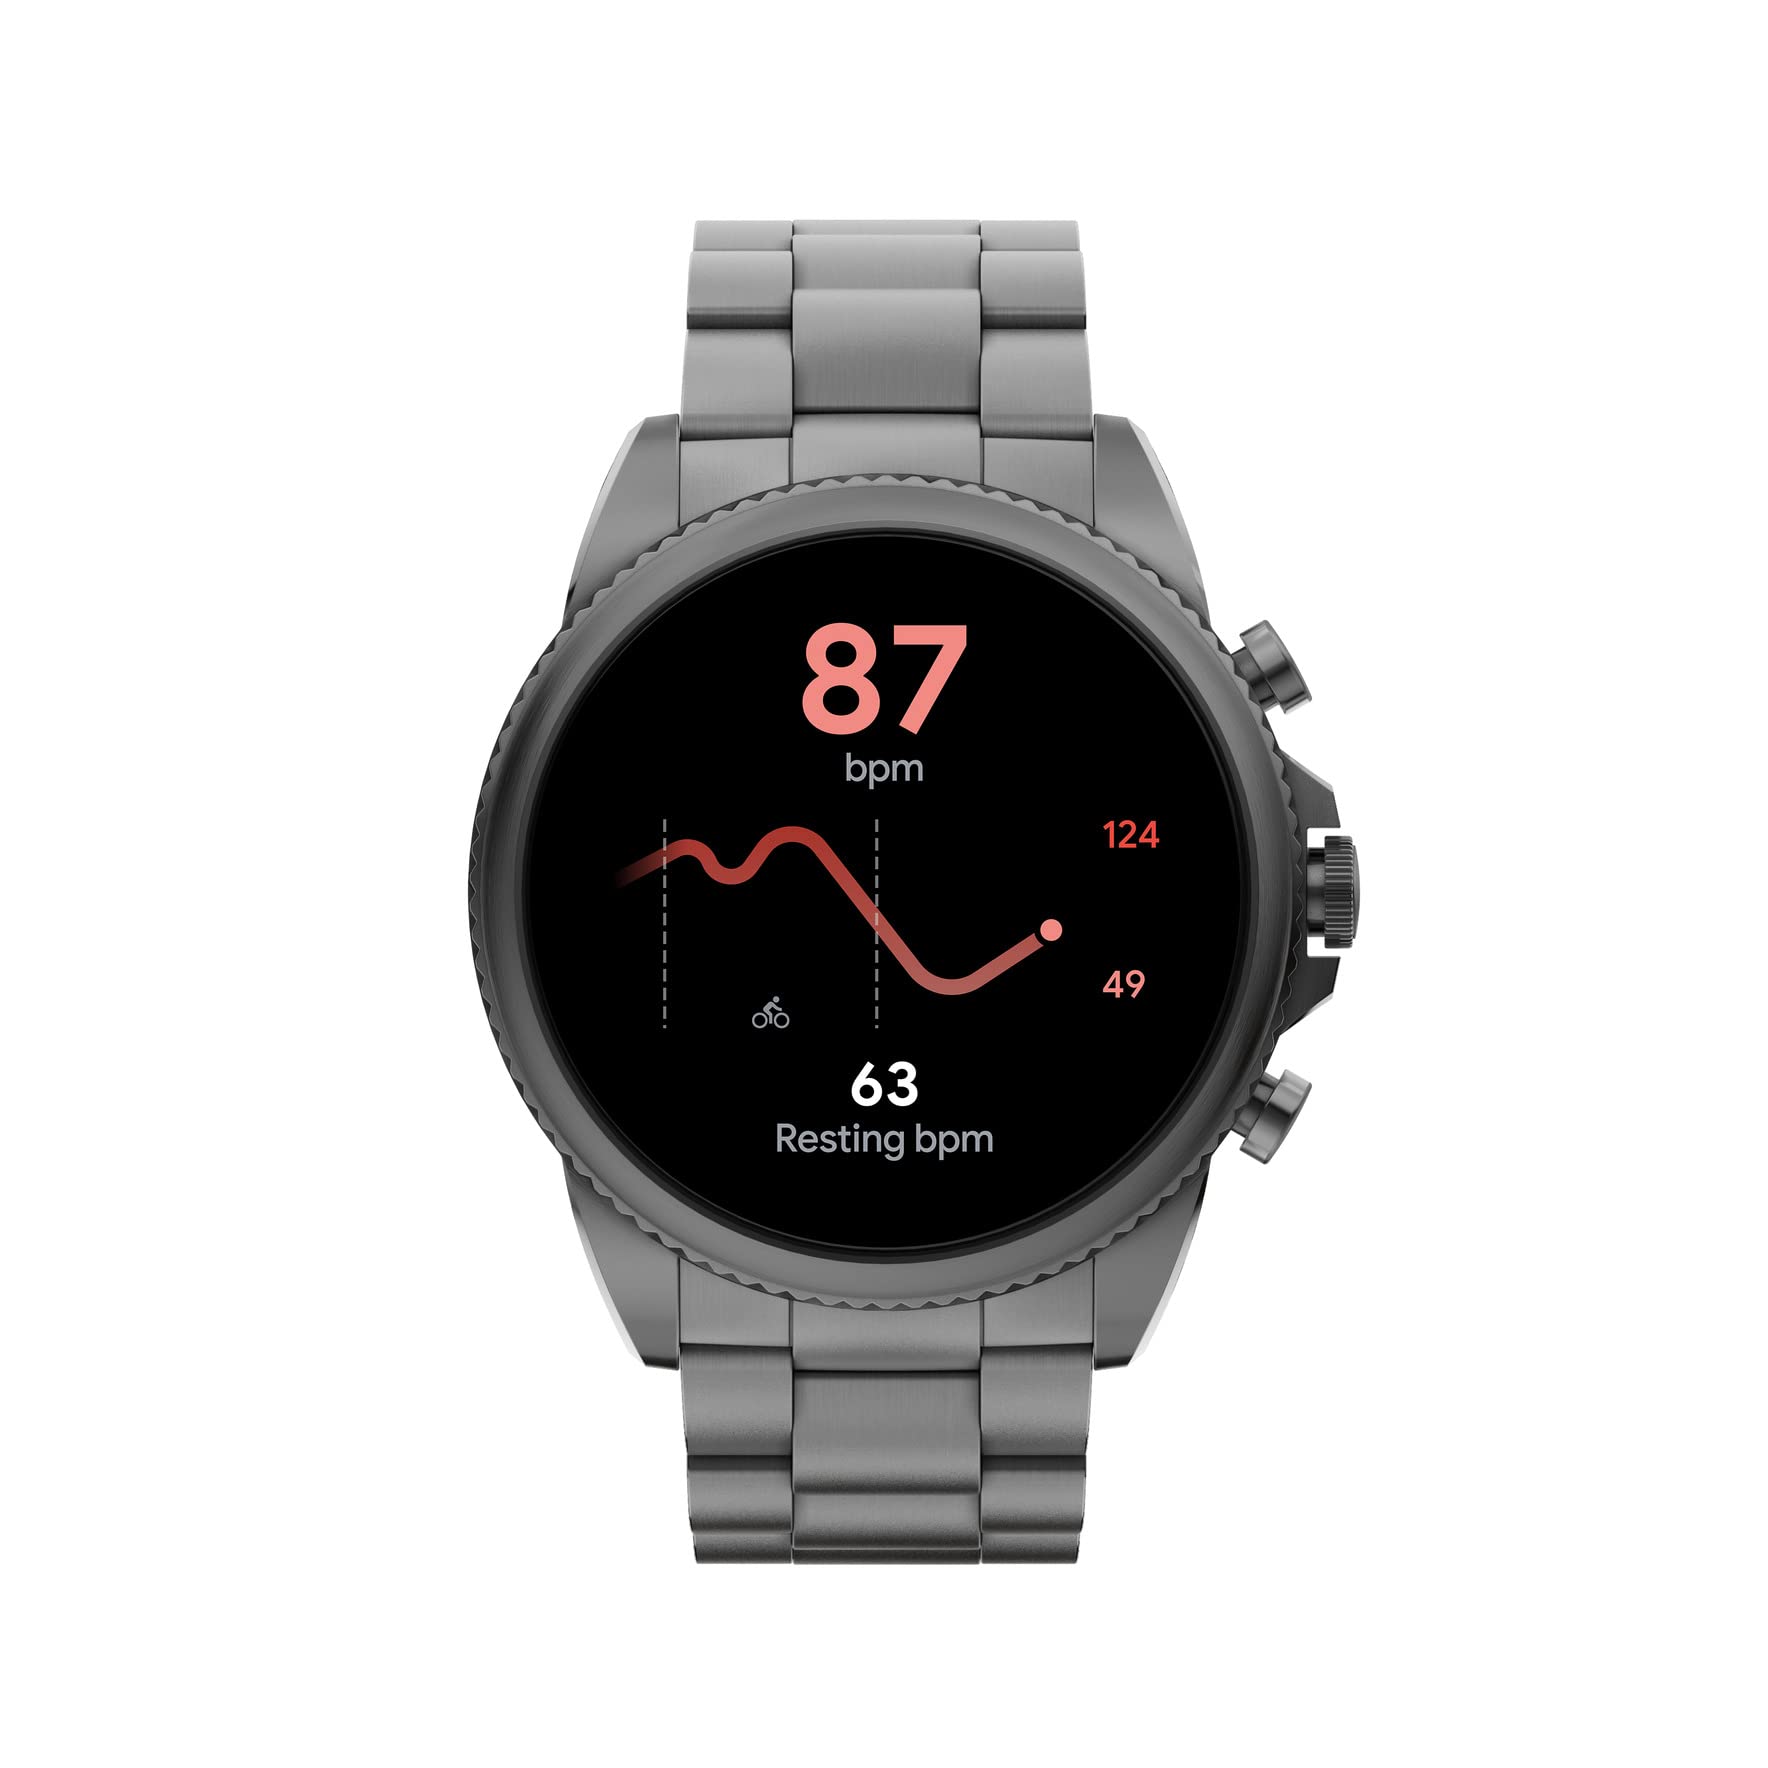 Fossil Men's Gen 6 44mm Touchscreen Smart Watch with Alexa Built-In, Fitness Tracker, Sleep Tracker, Heart Rate Monitor, GPS, Speaker, Music Control, Smartphone Notifications